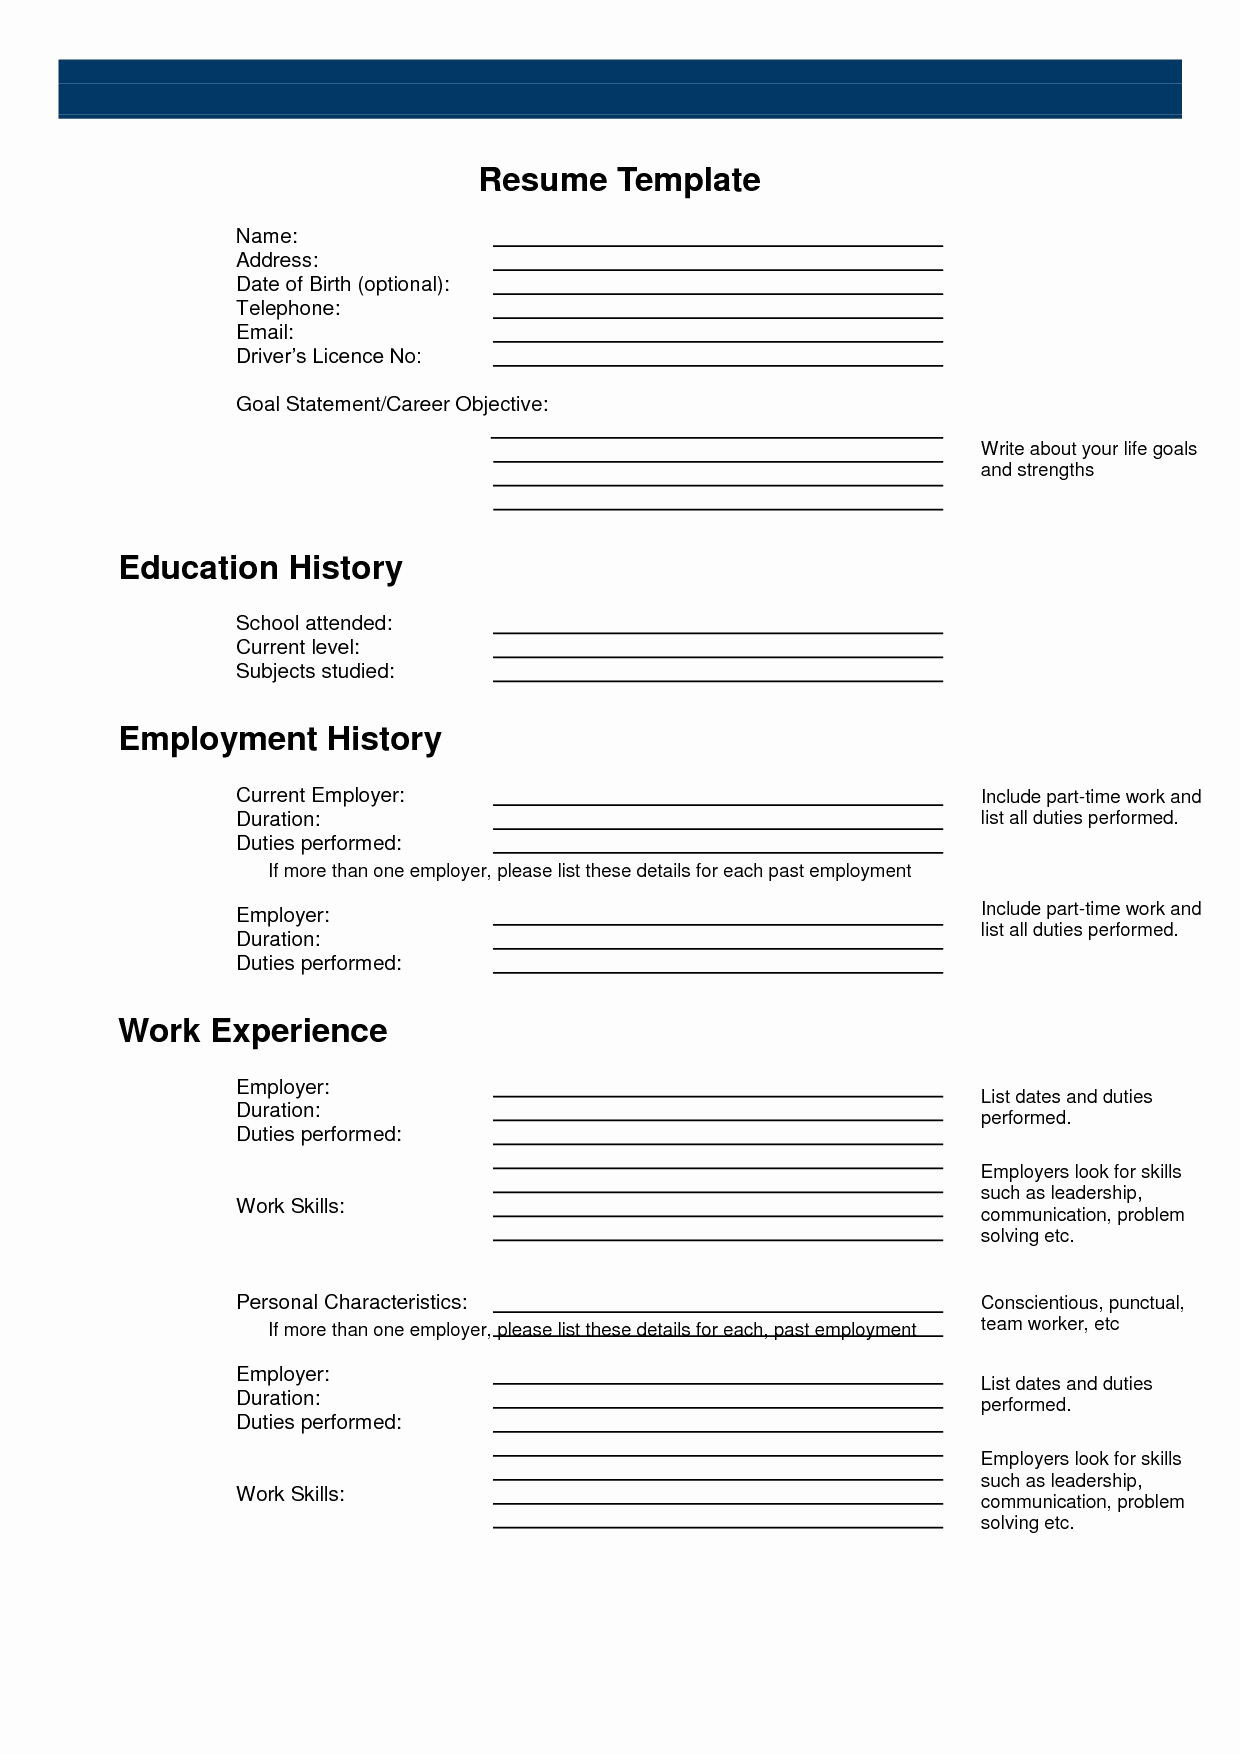 Free Resume Builder Templates